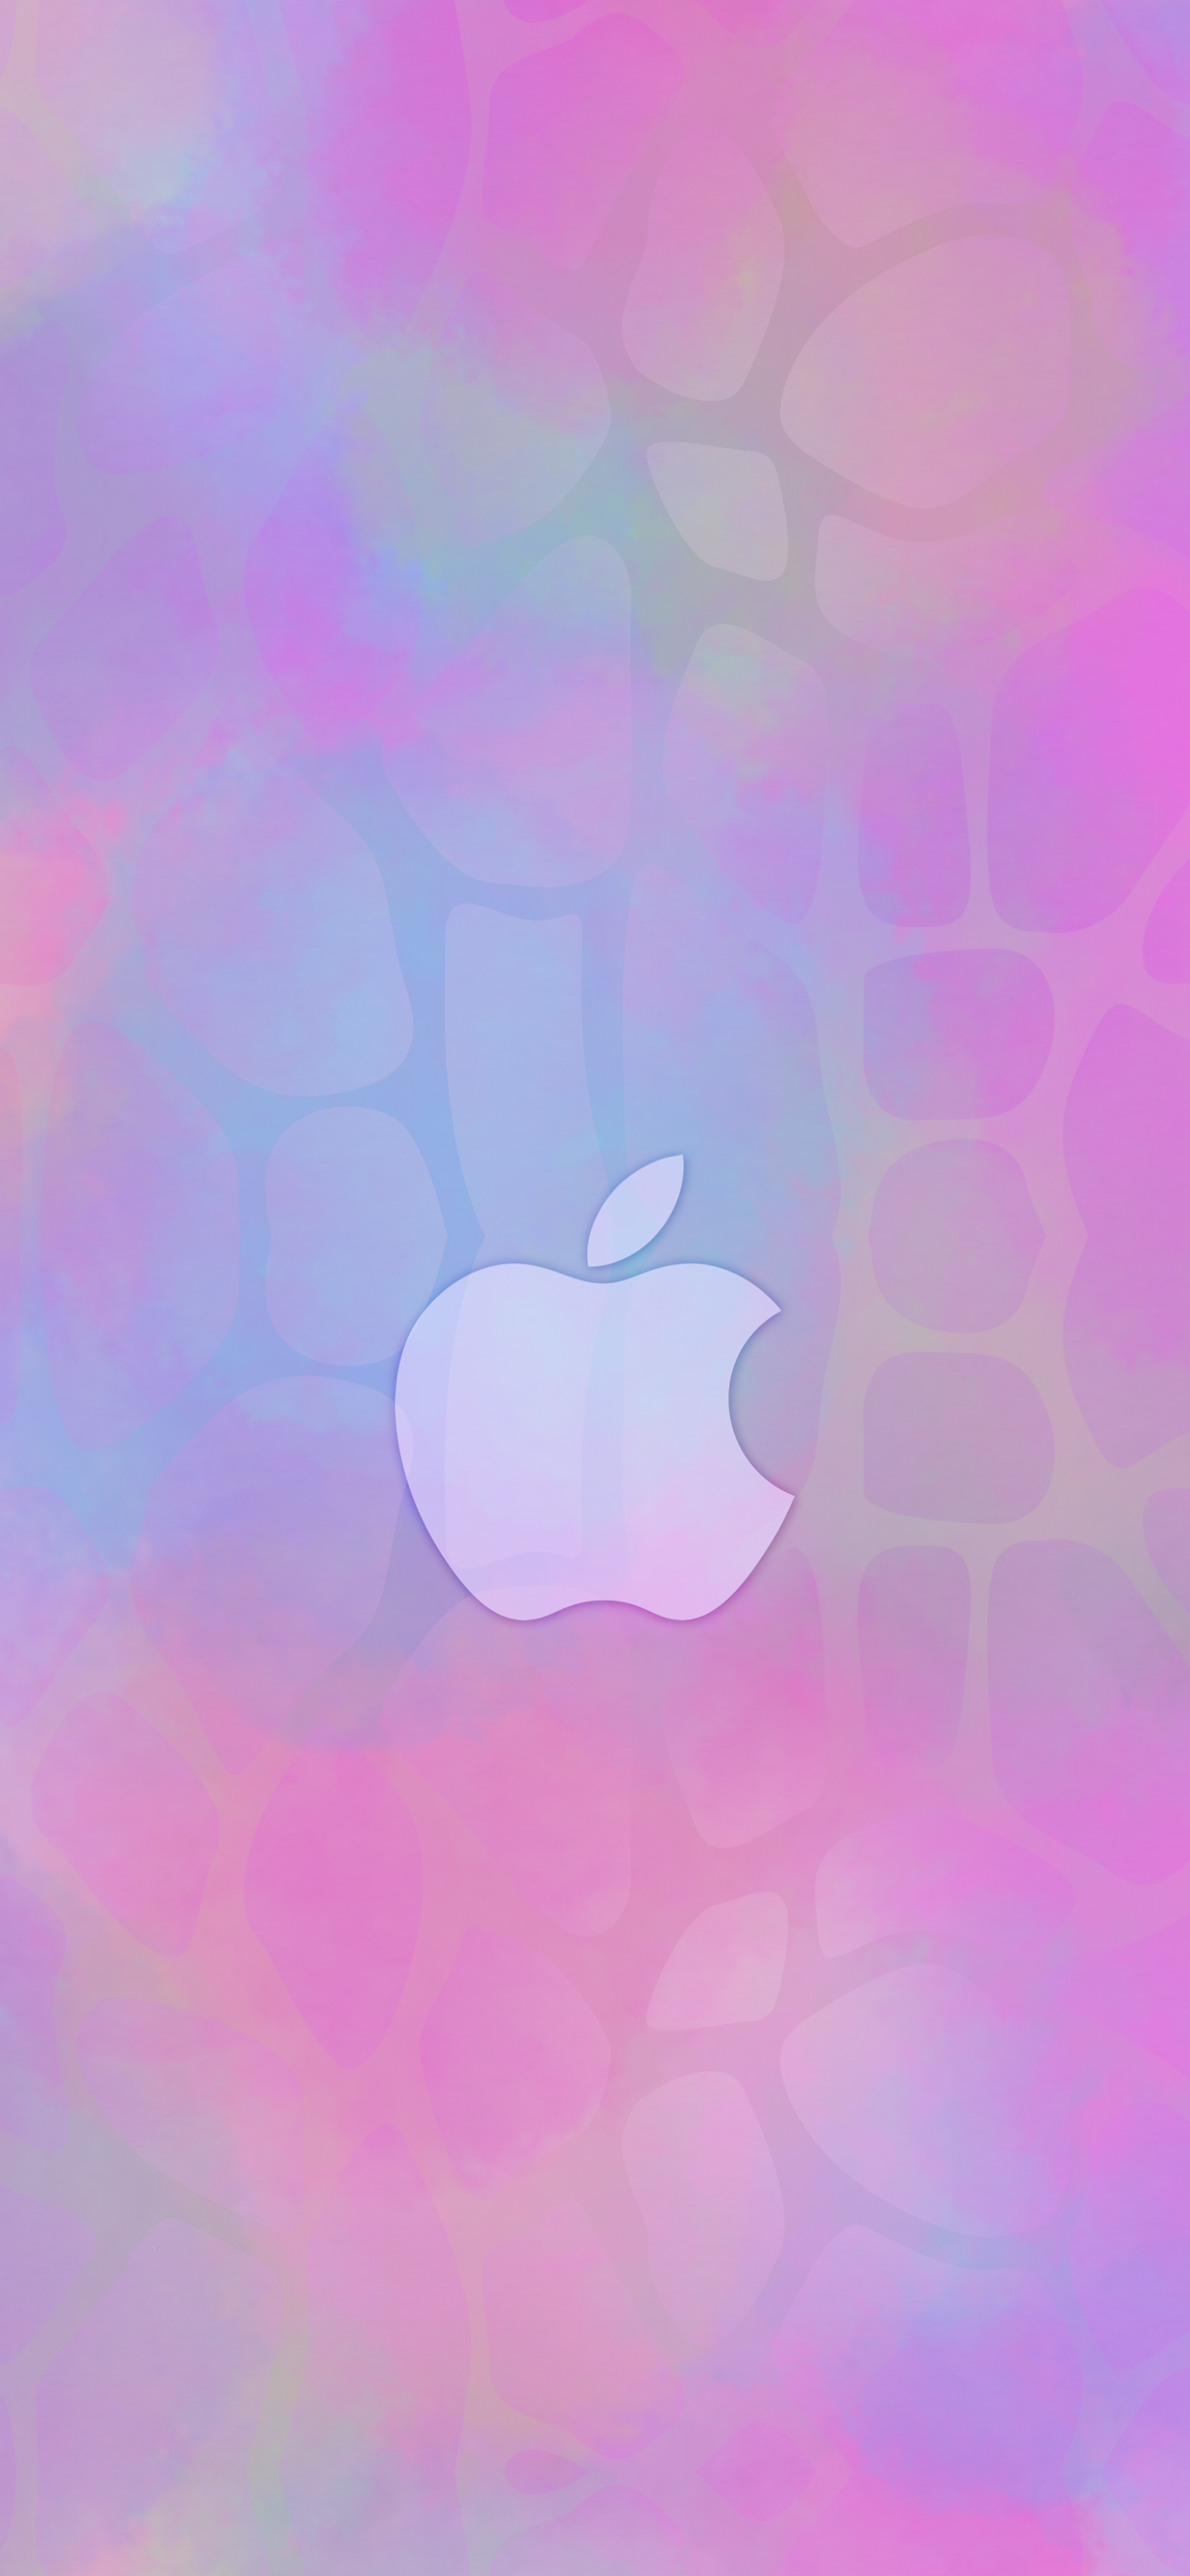 Rainbow Apple Wallpaper. Apple wallpaper, Apple logo wallpaper iphone, Apple wallpaper iphone